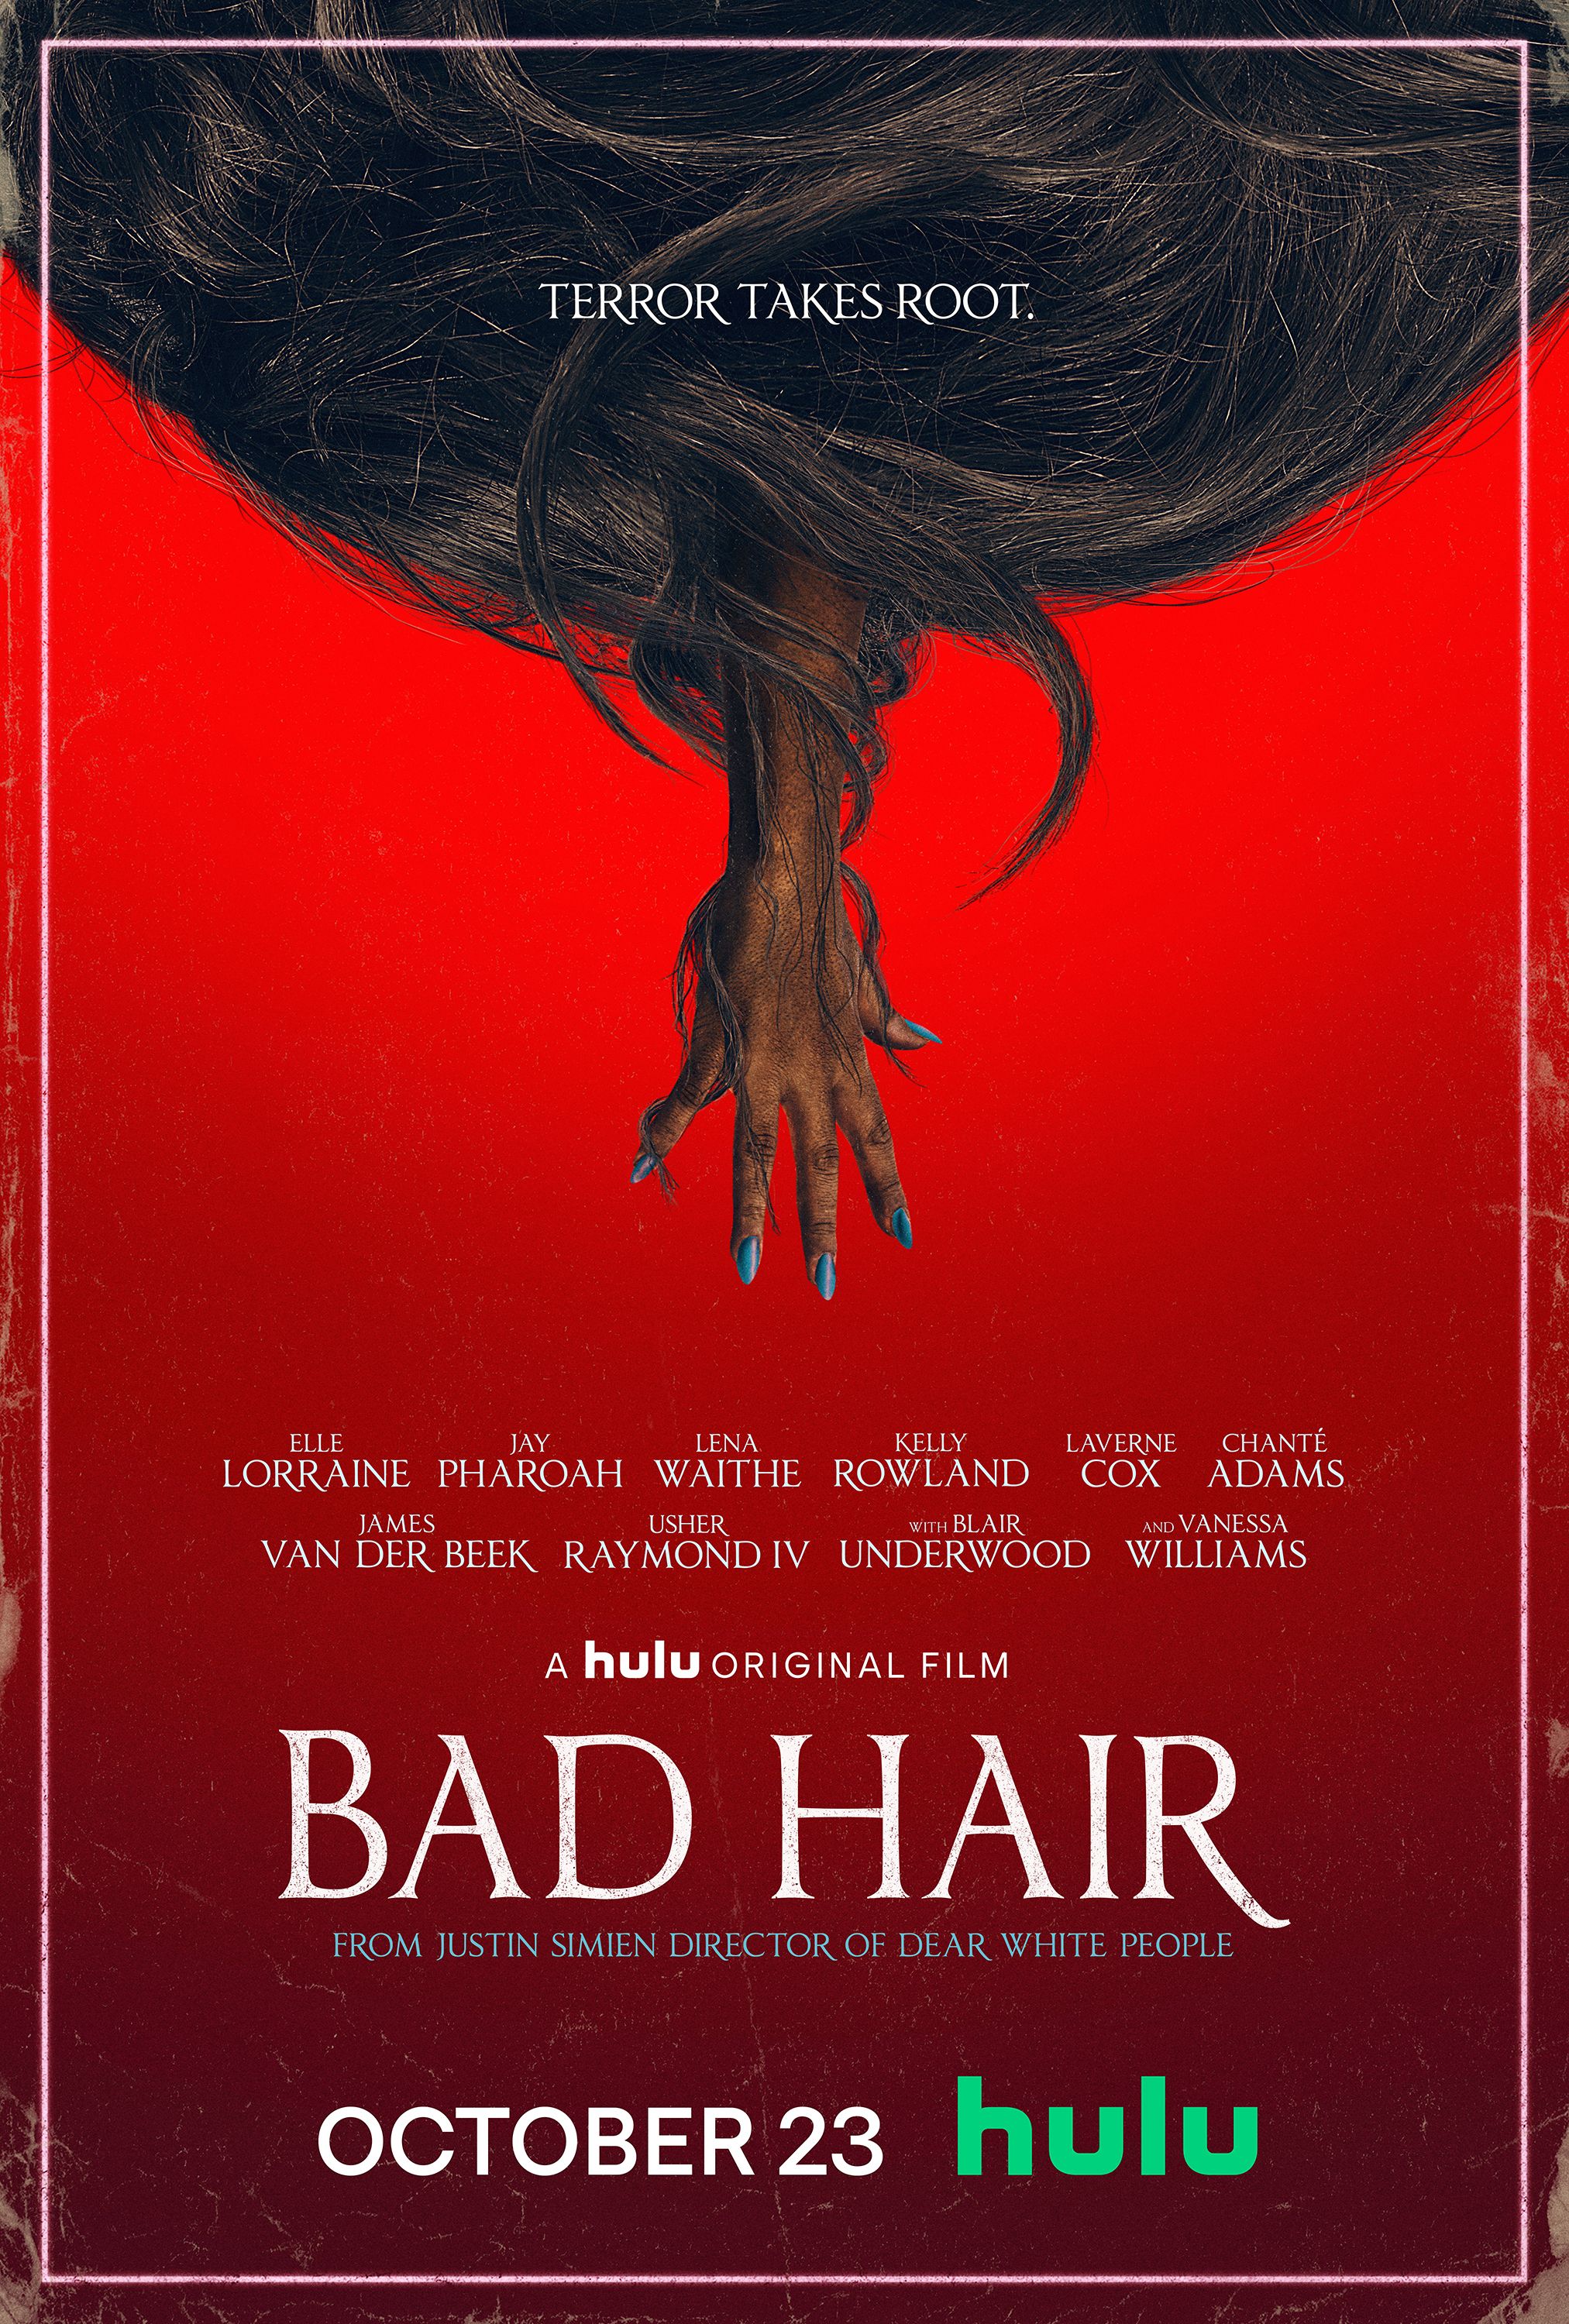 Bad Hair Film Poster